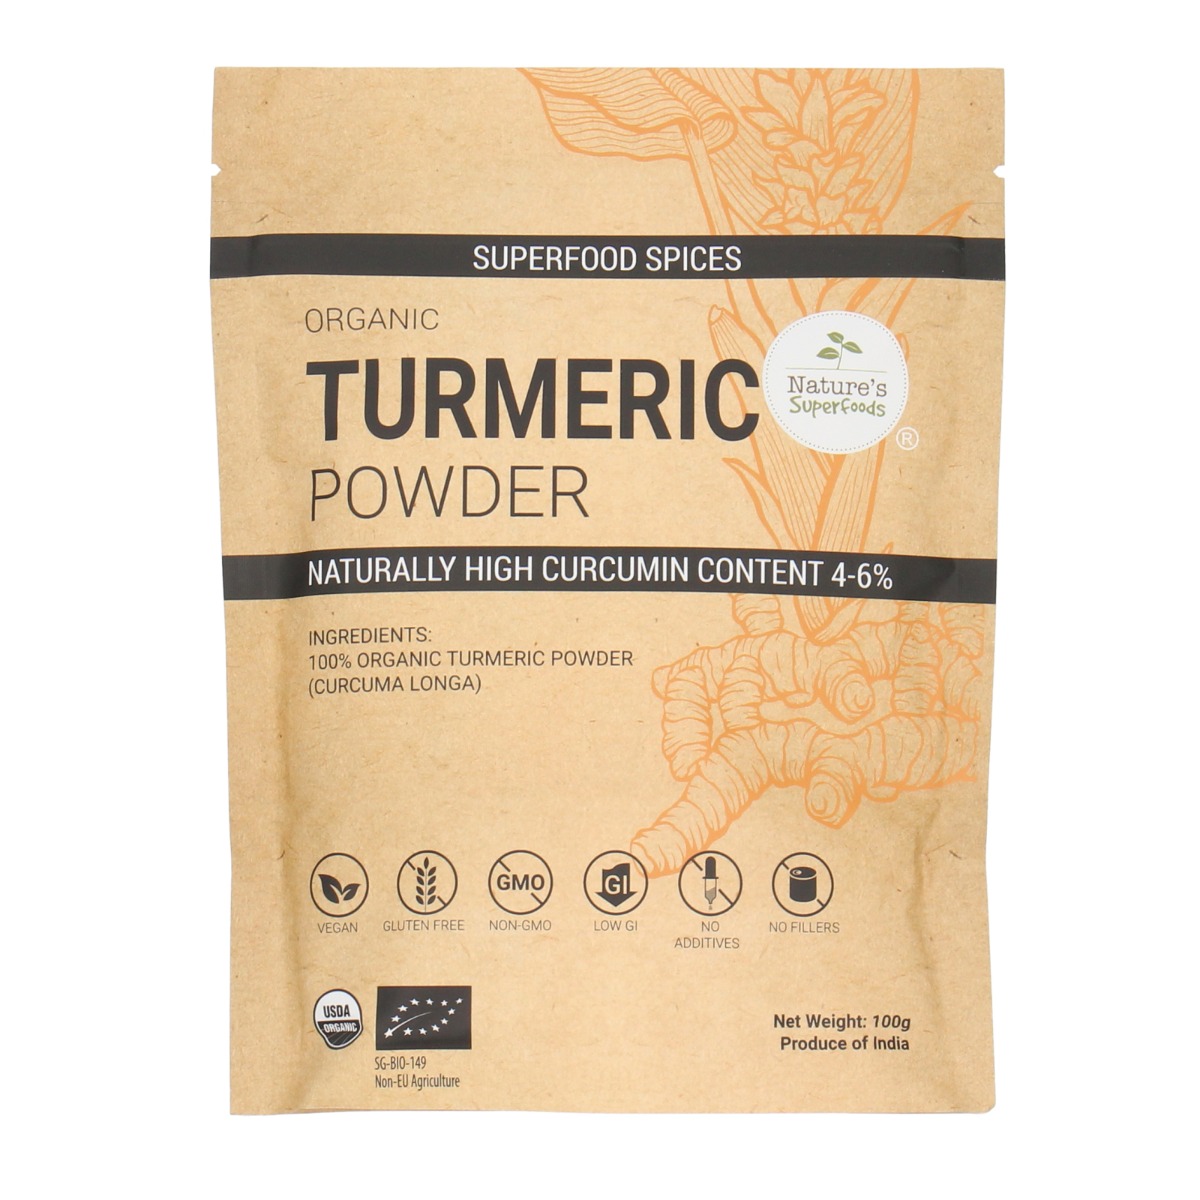 Organic Turmeric Powder-100g resealable pack front